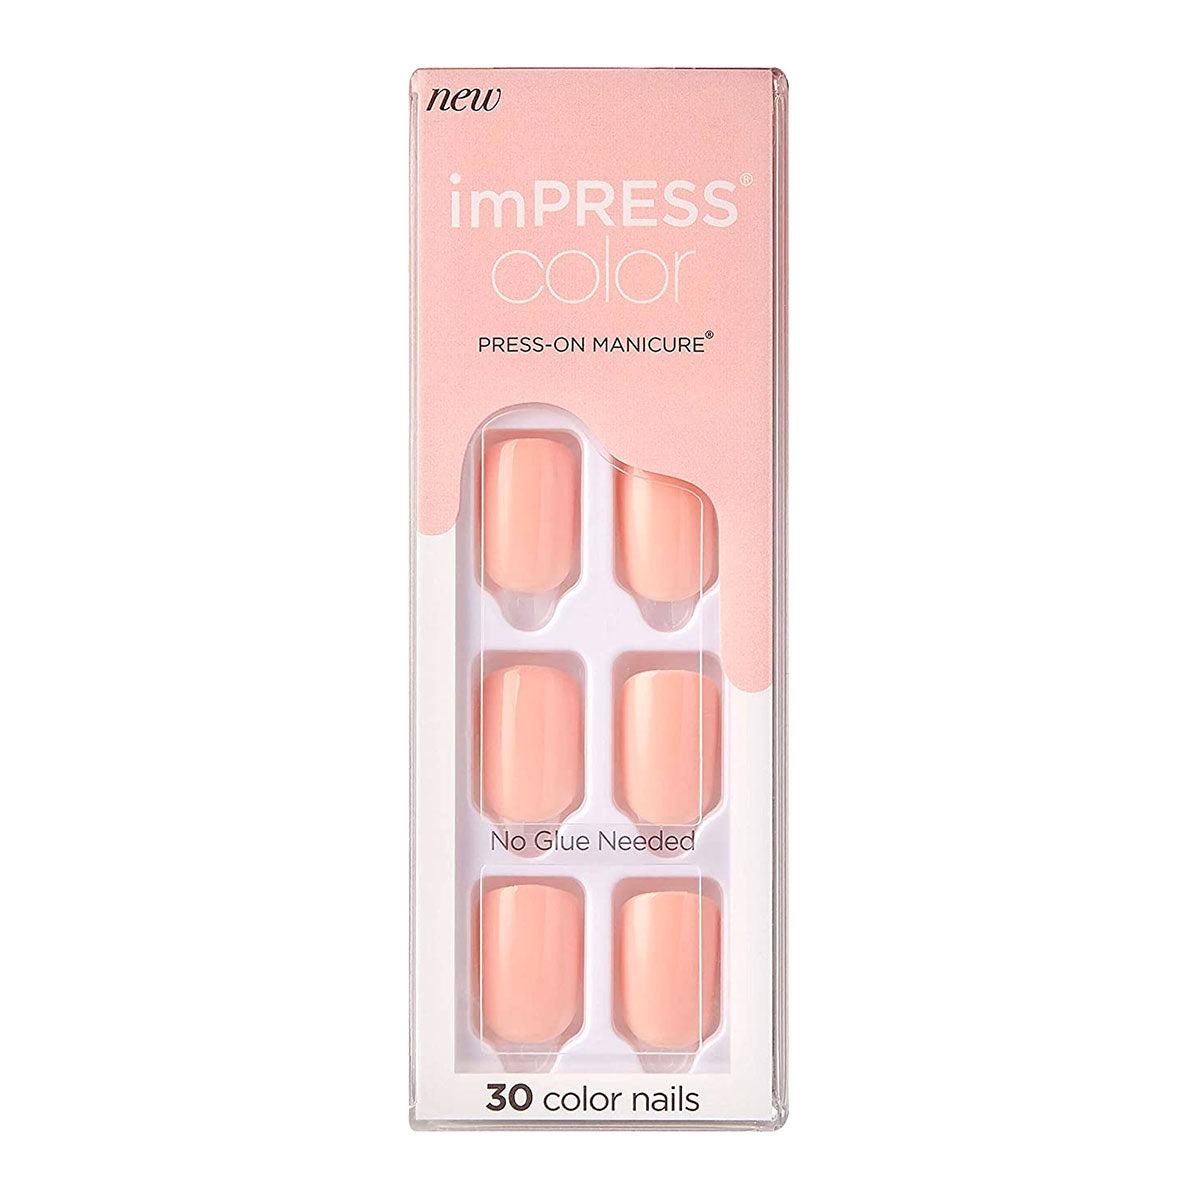 Kiss imPRESS Color Press-On Manicure | Peevish Pink